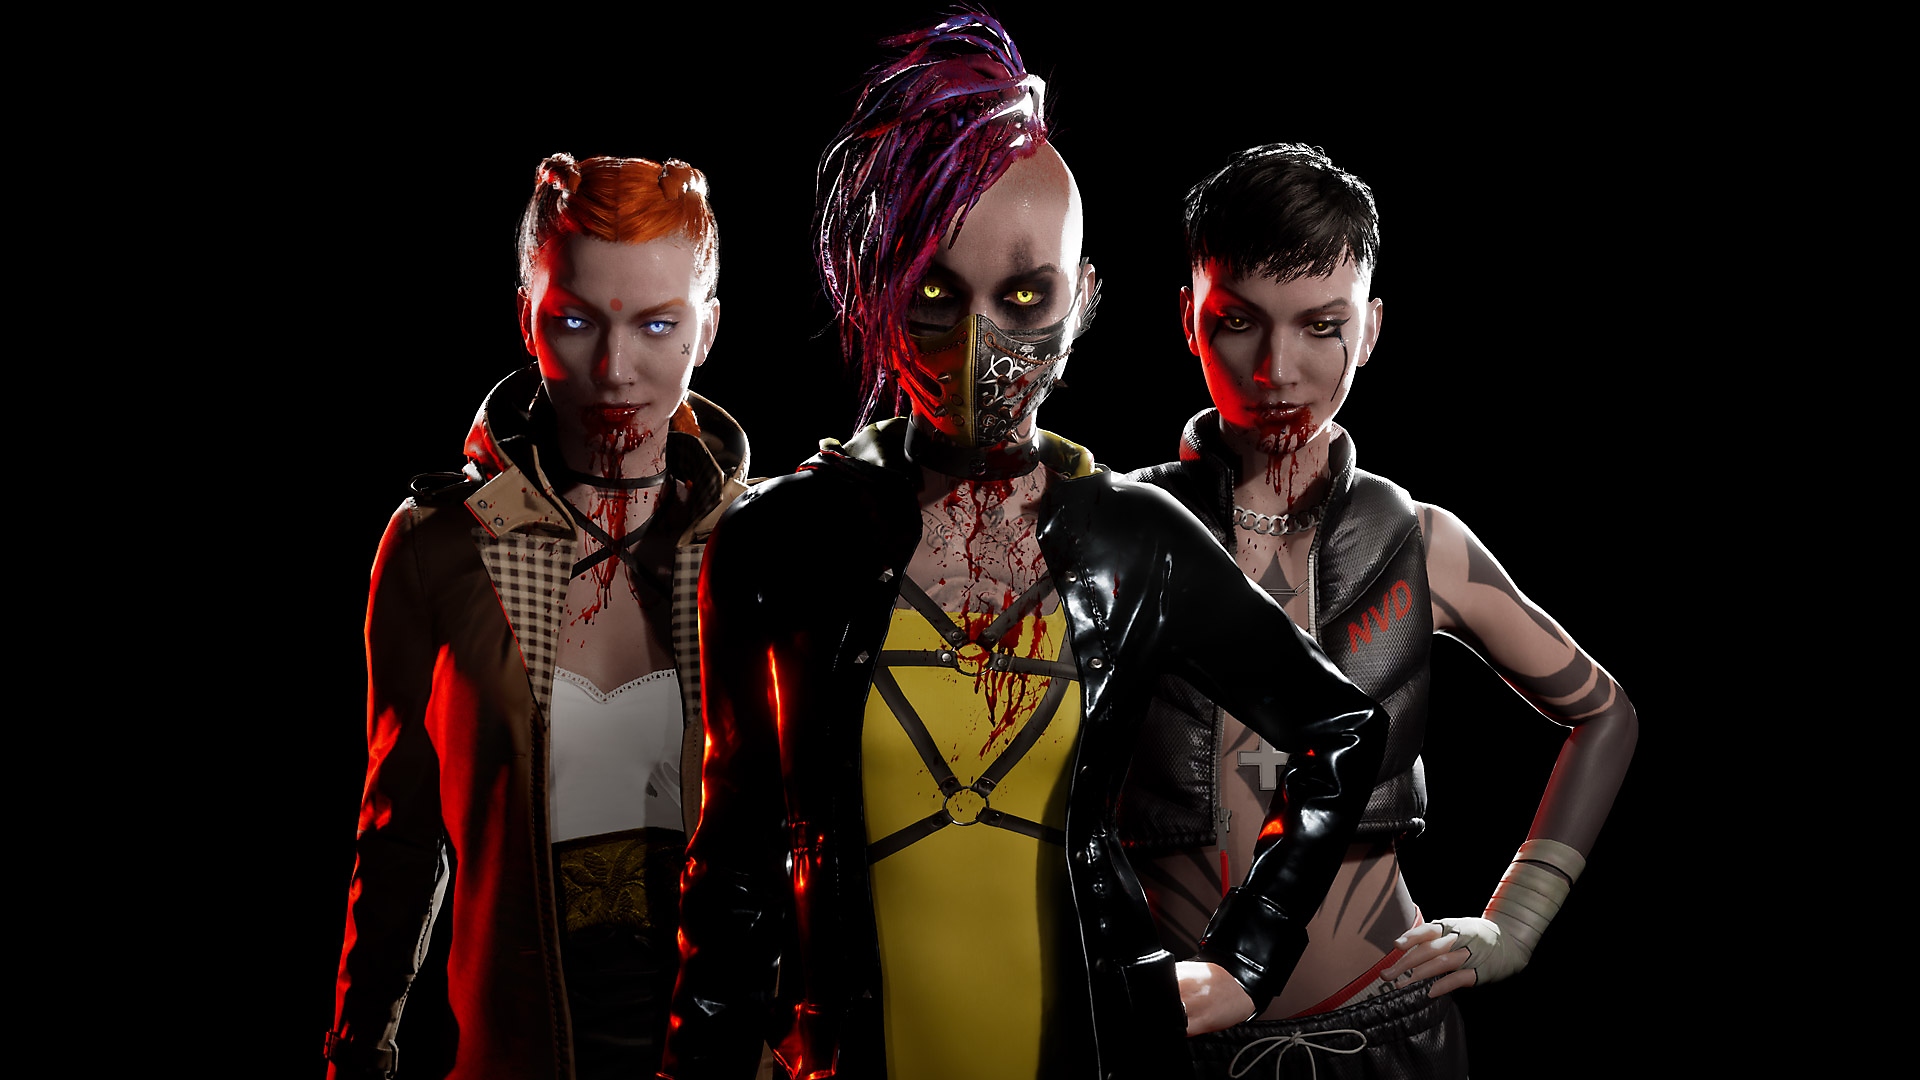 Vampire the Masquerade – Bloodhunt – снимок экрана с новыми аксессуарами